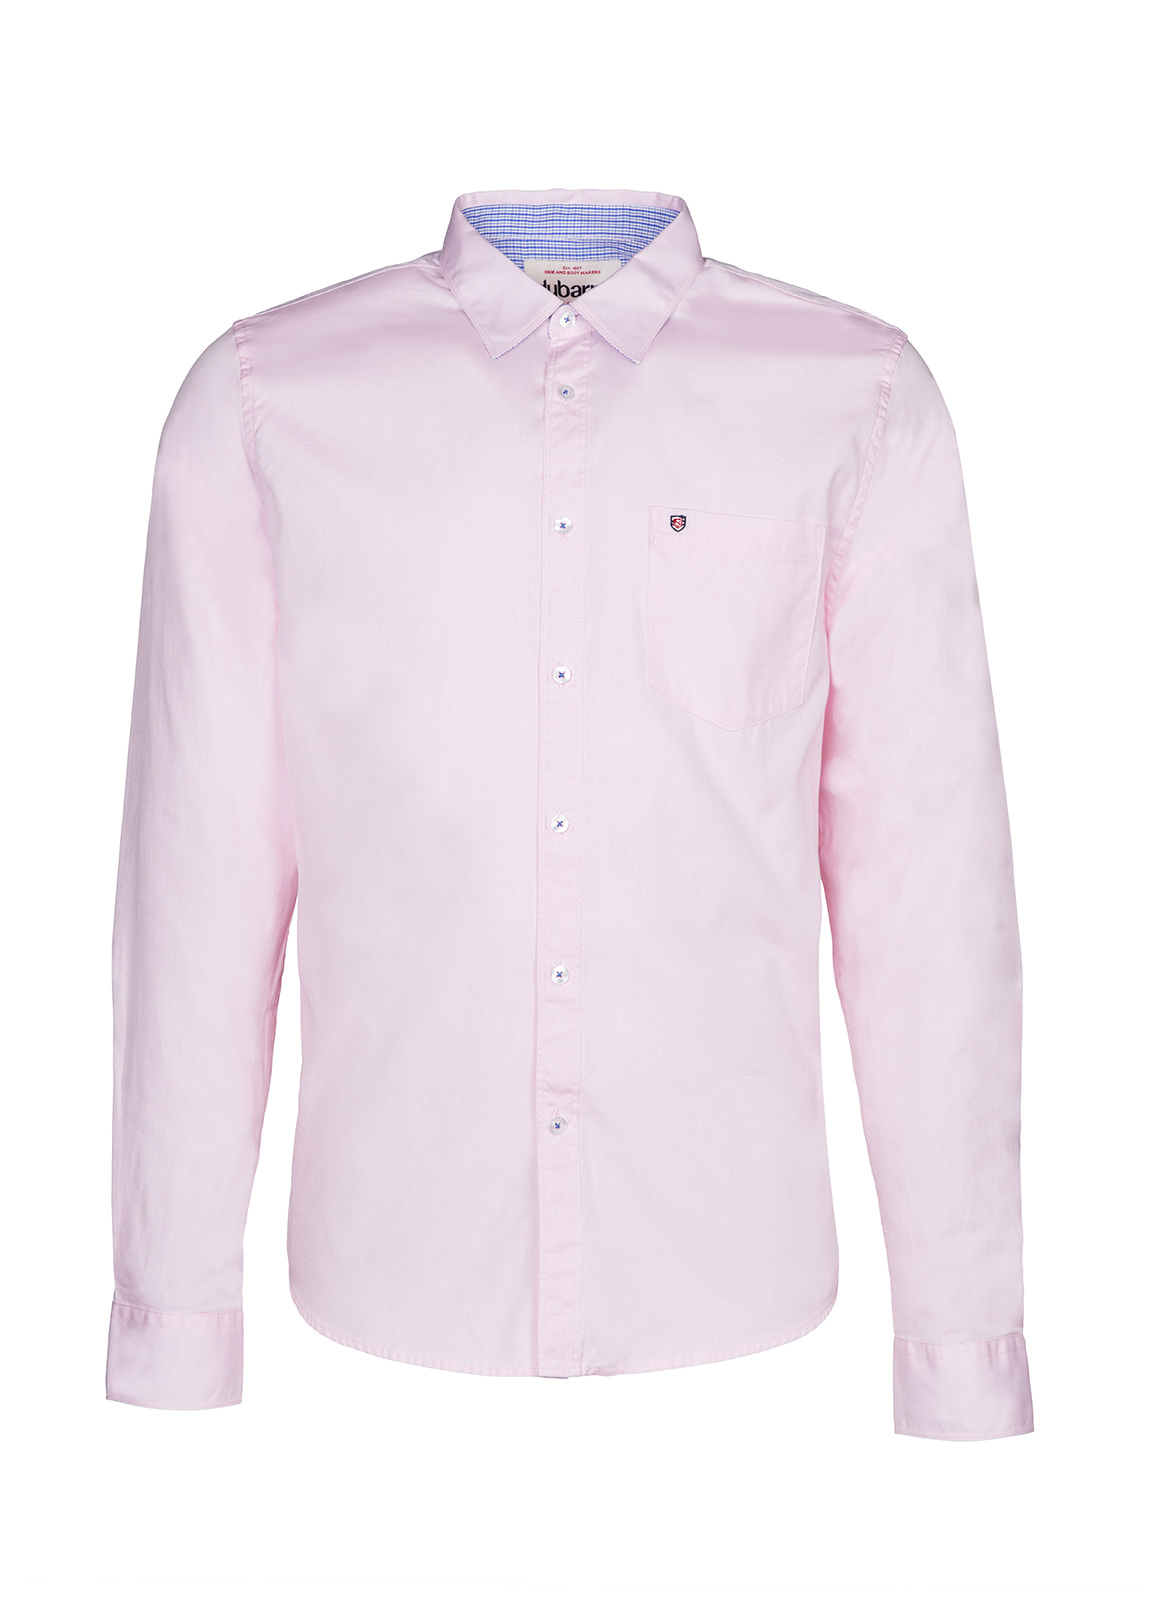 Dubarry_Rathgar shirt - Pink_Image_2